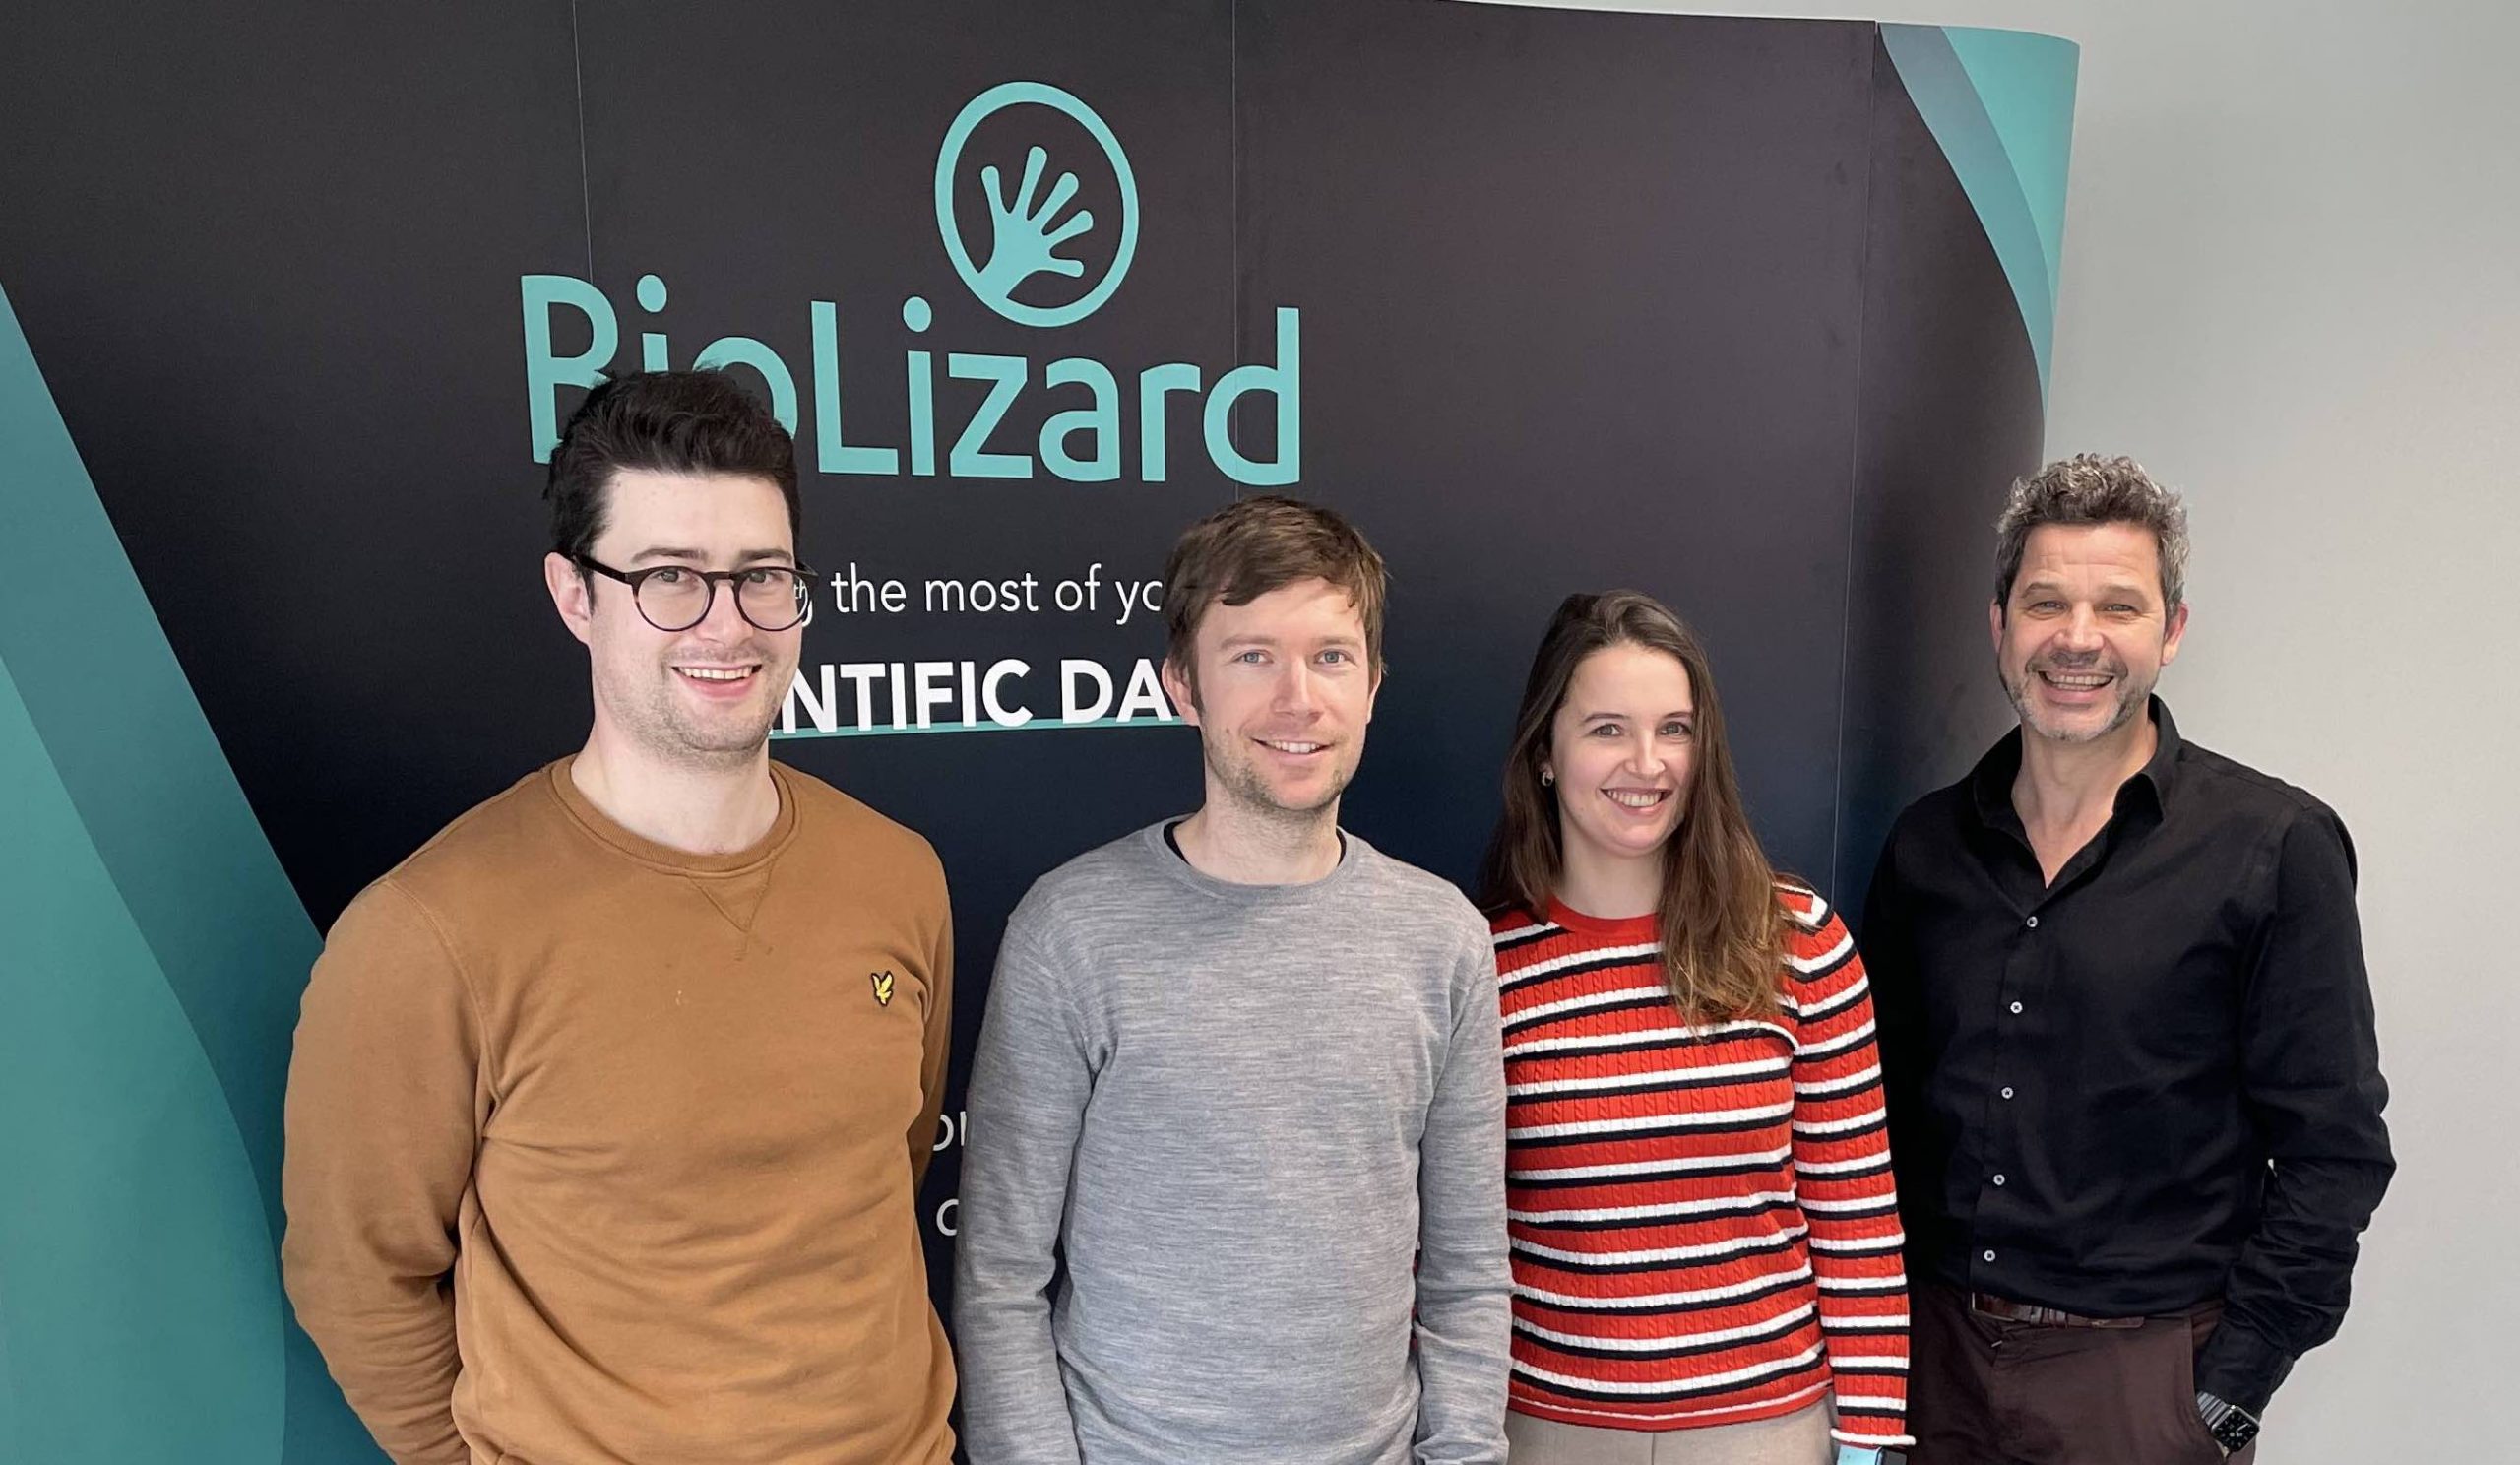 BioLizard's preclinical data management team